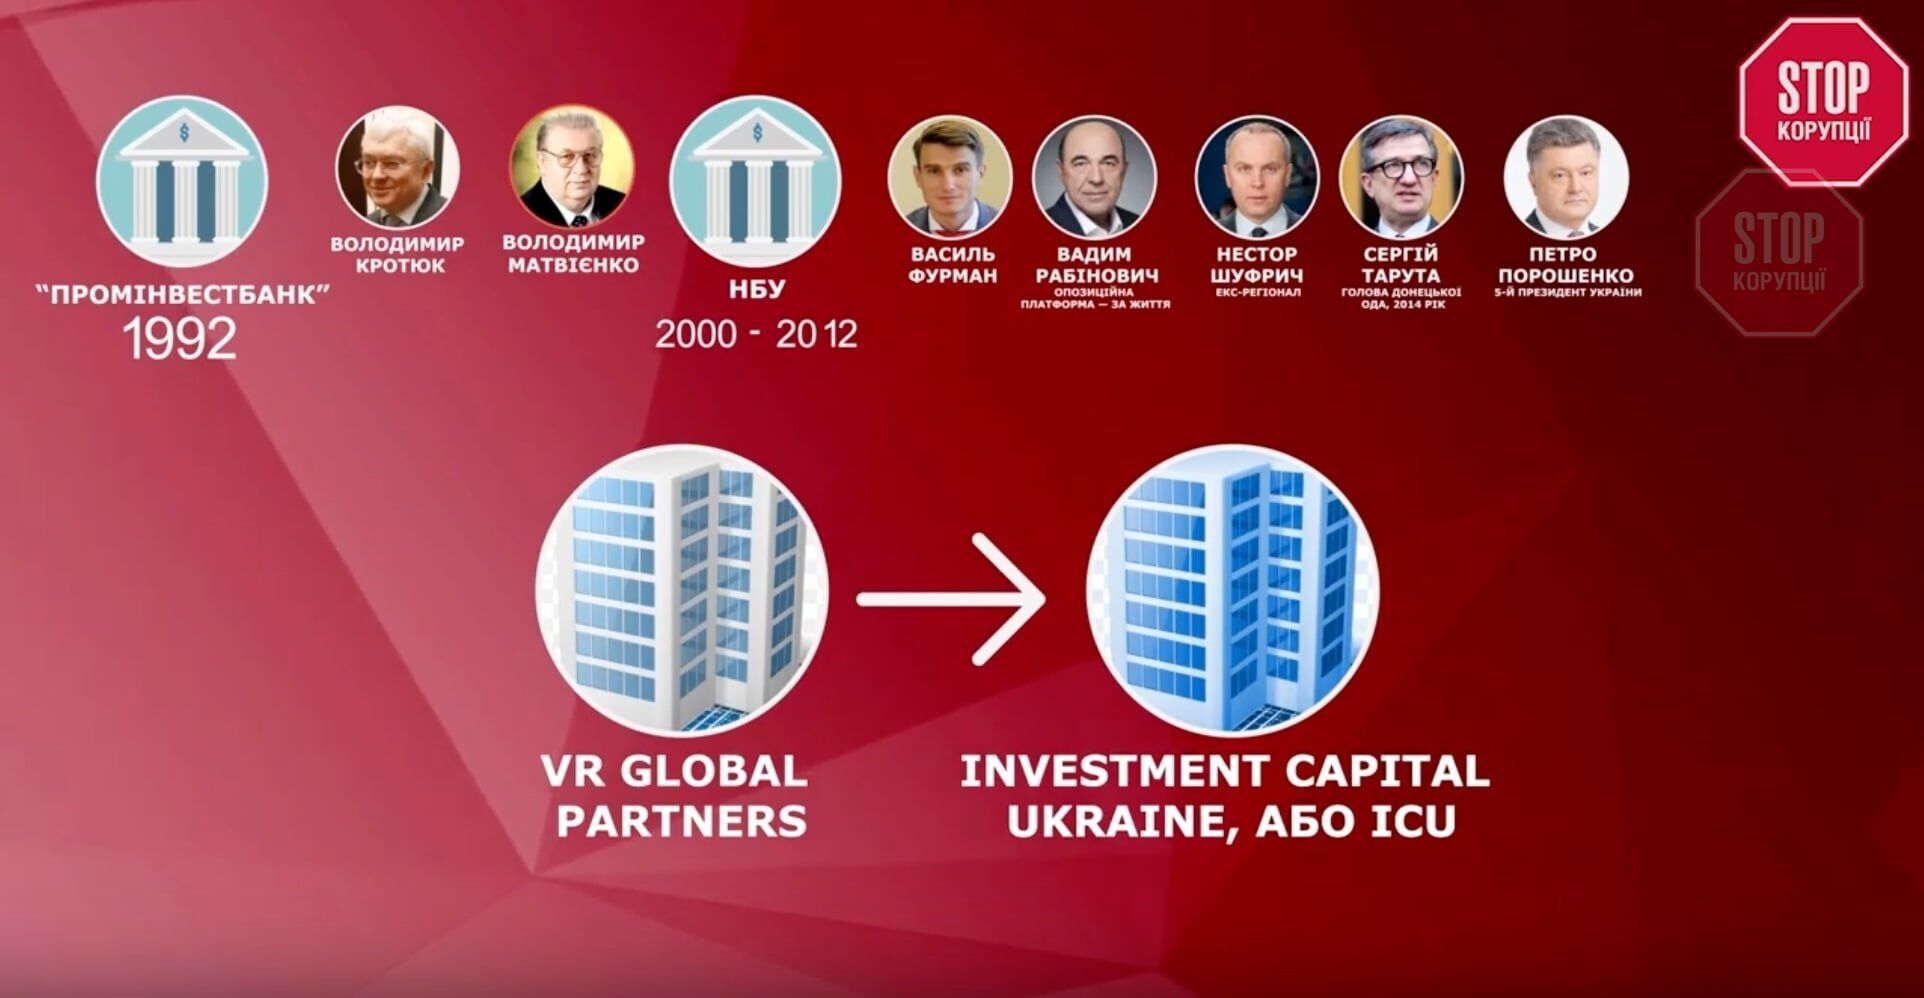  VR Global Partners є партнером Investment Capital Ukraine